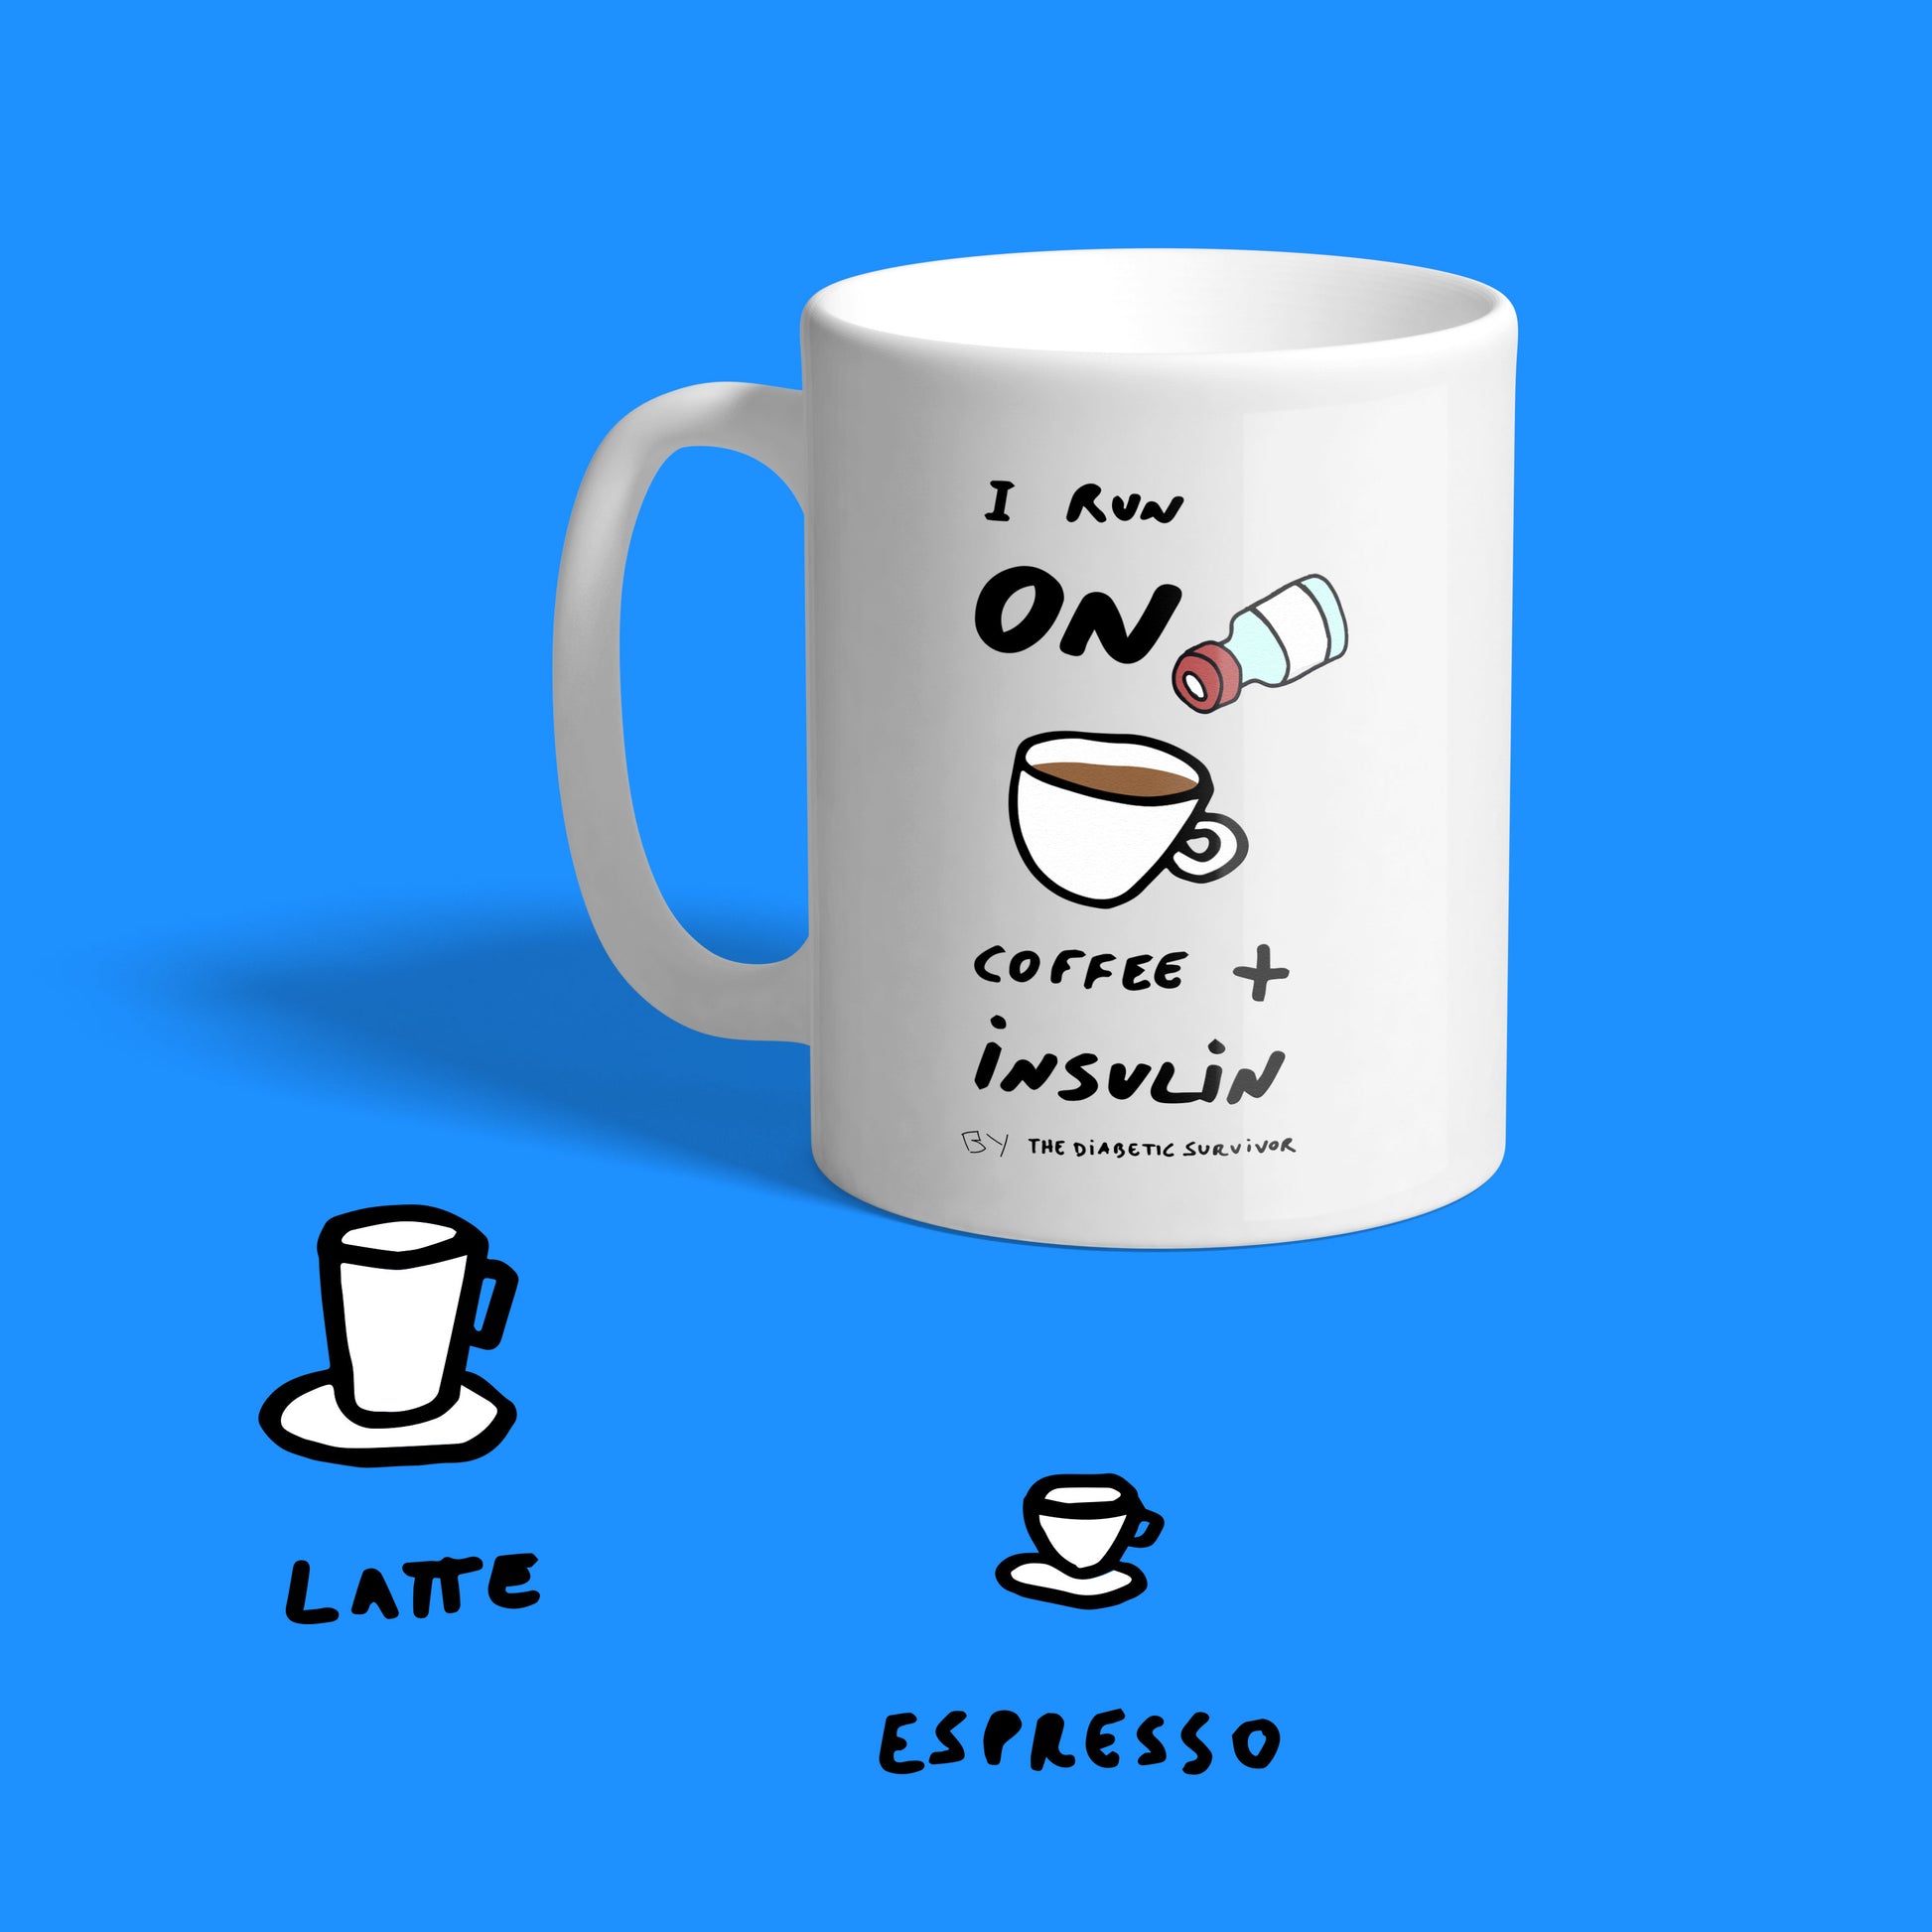 I run on COFFEE + INSULIN latte and expresso mug, or a tea?